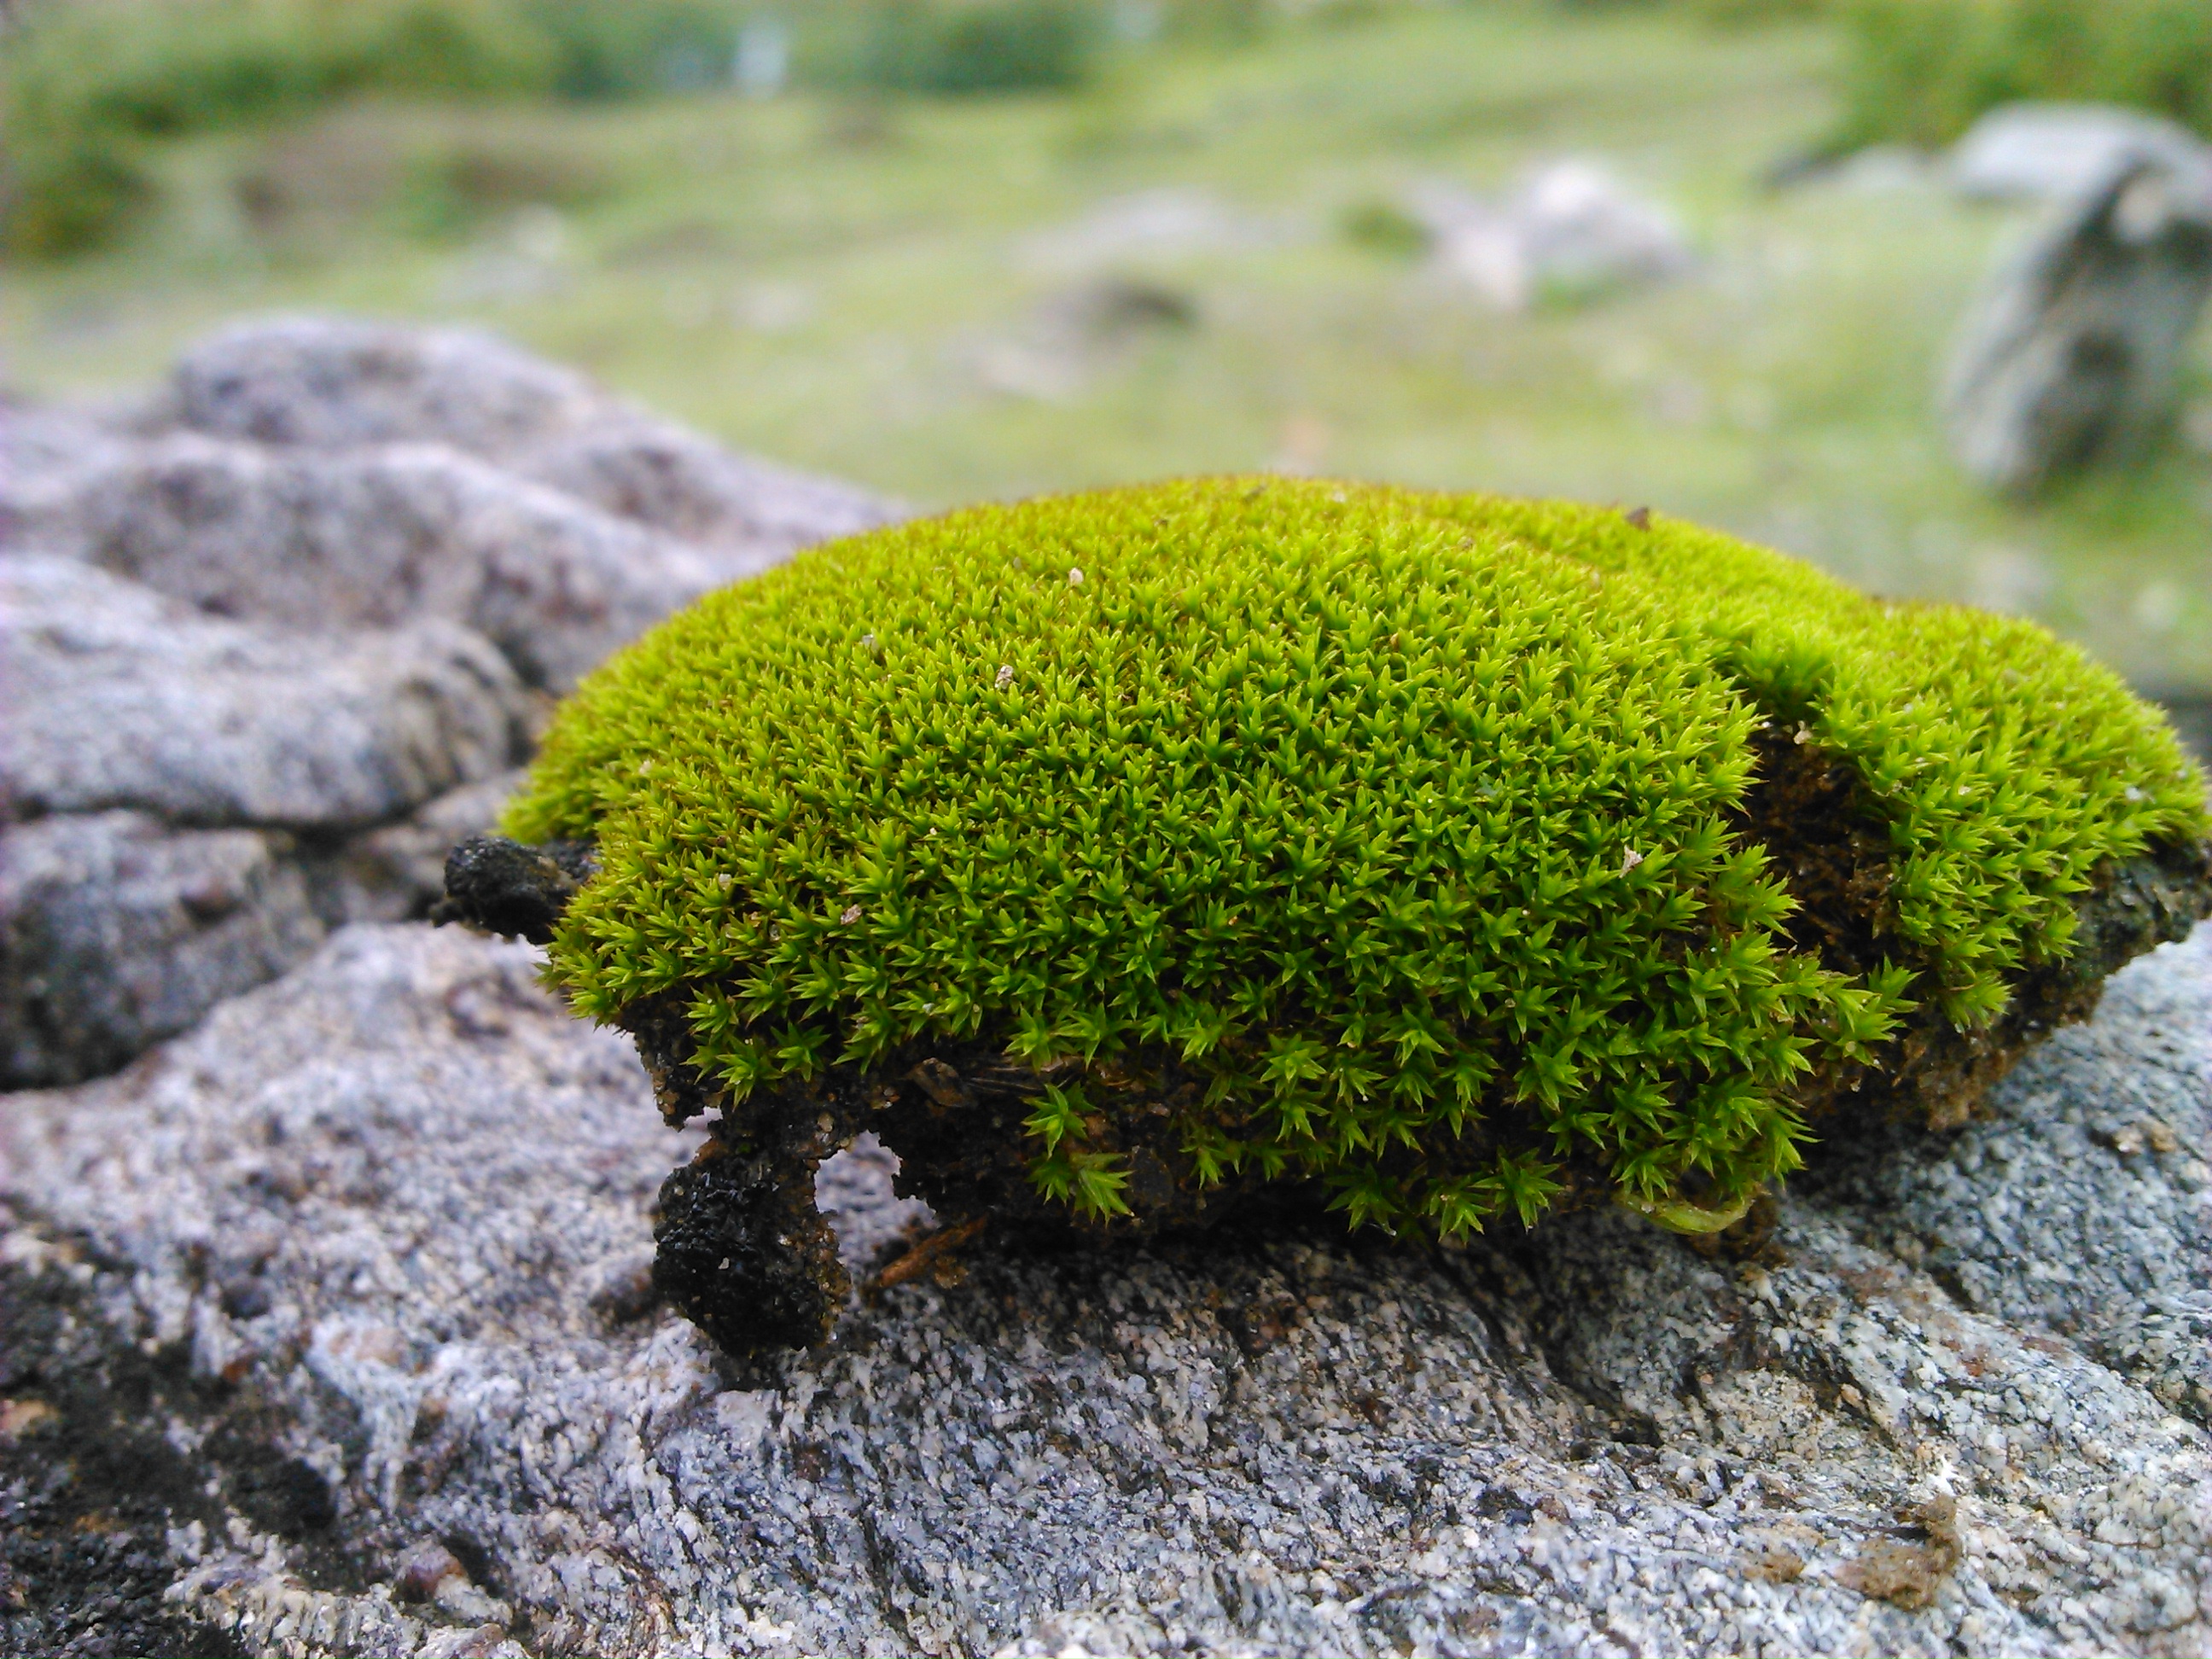 File:Grass On A Rock.jpg - Wikimedia Commons